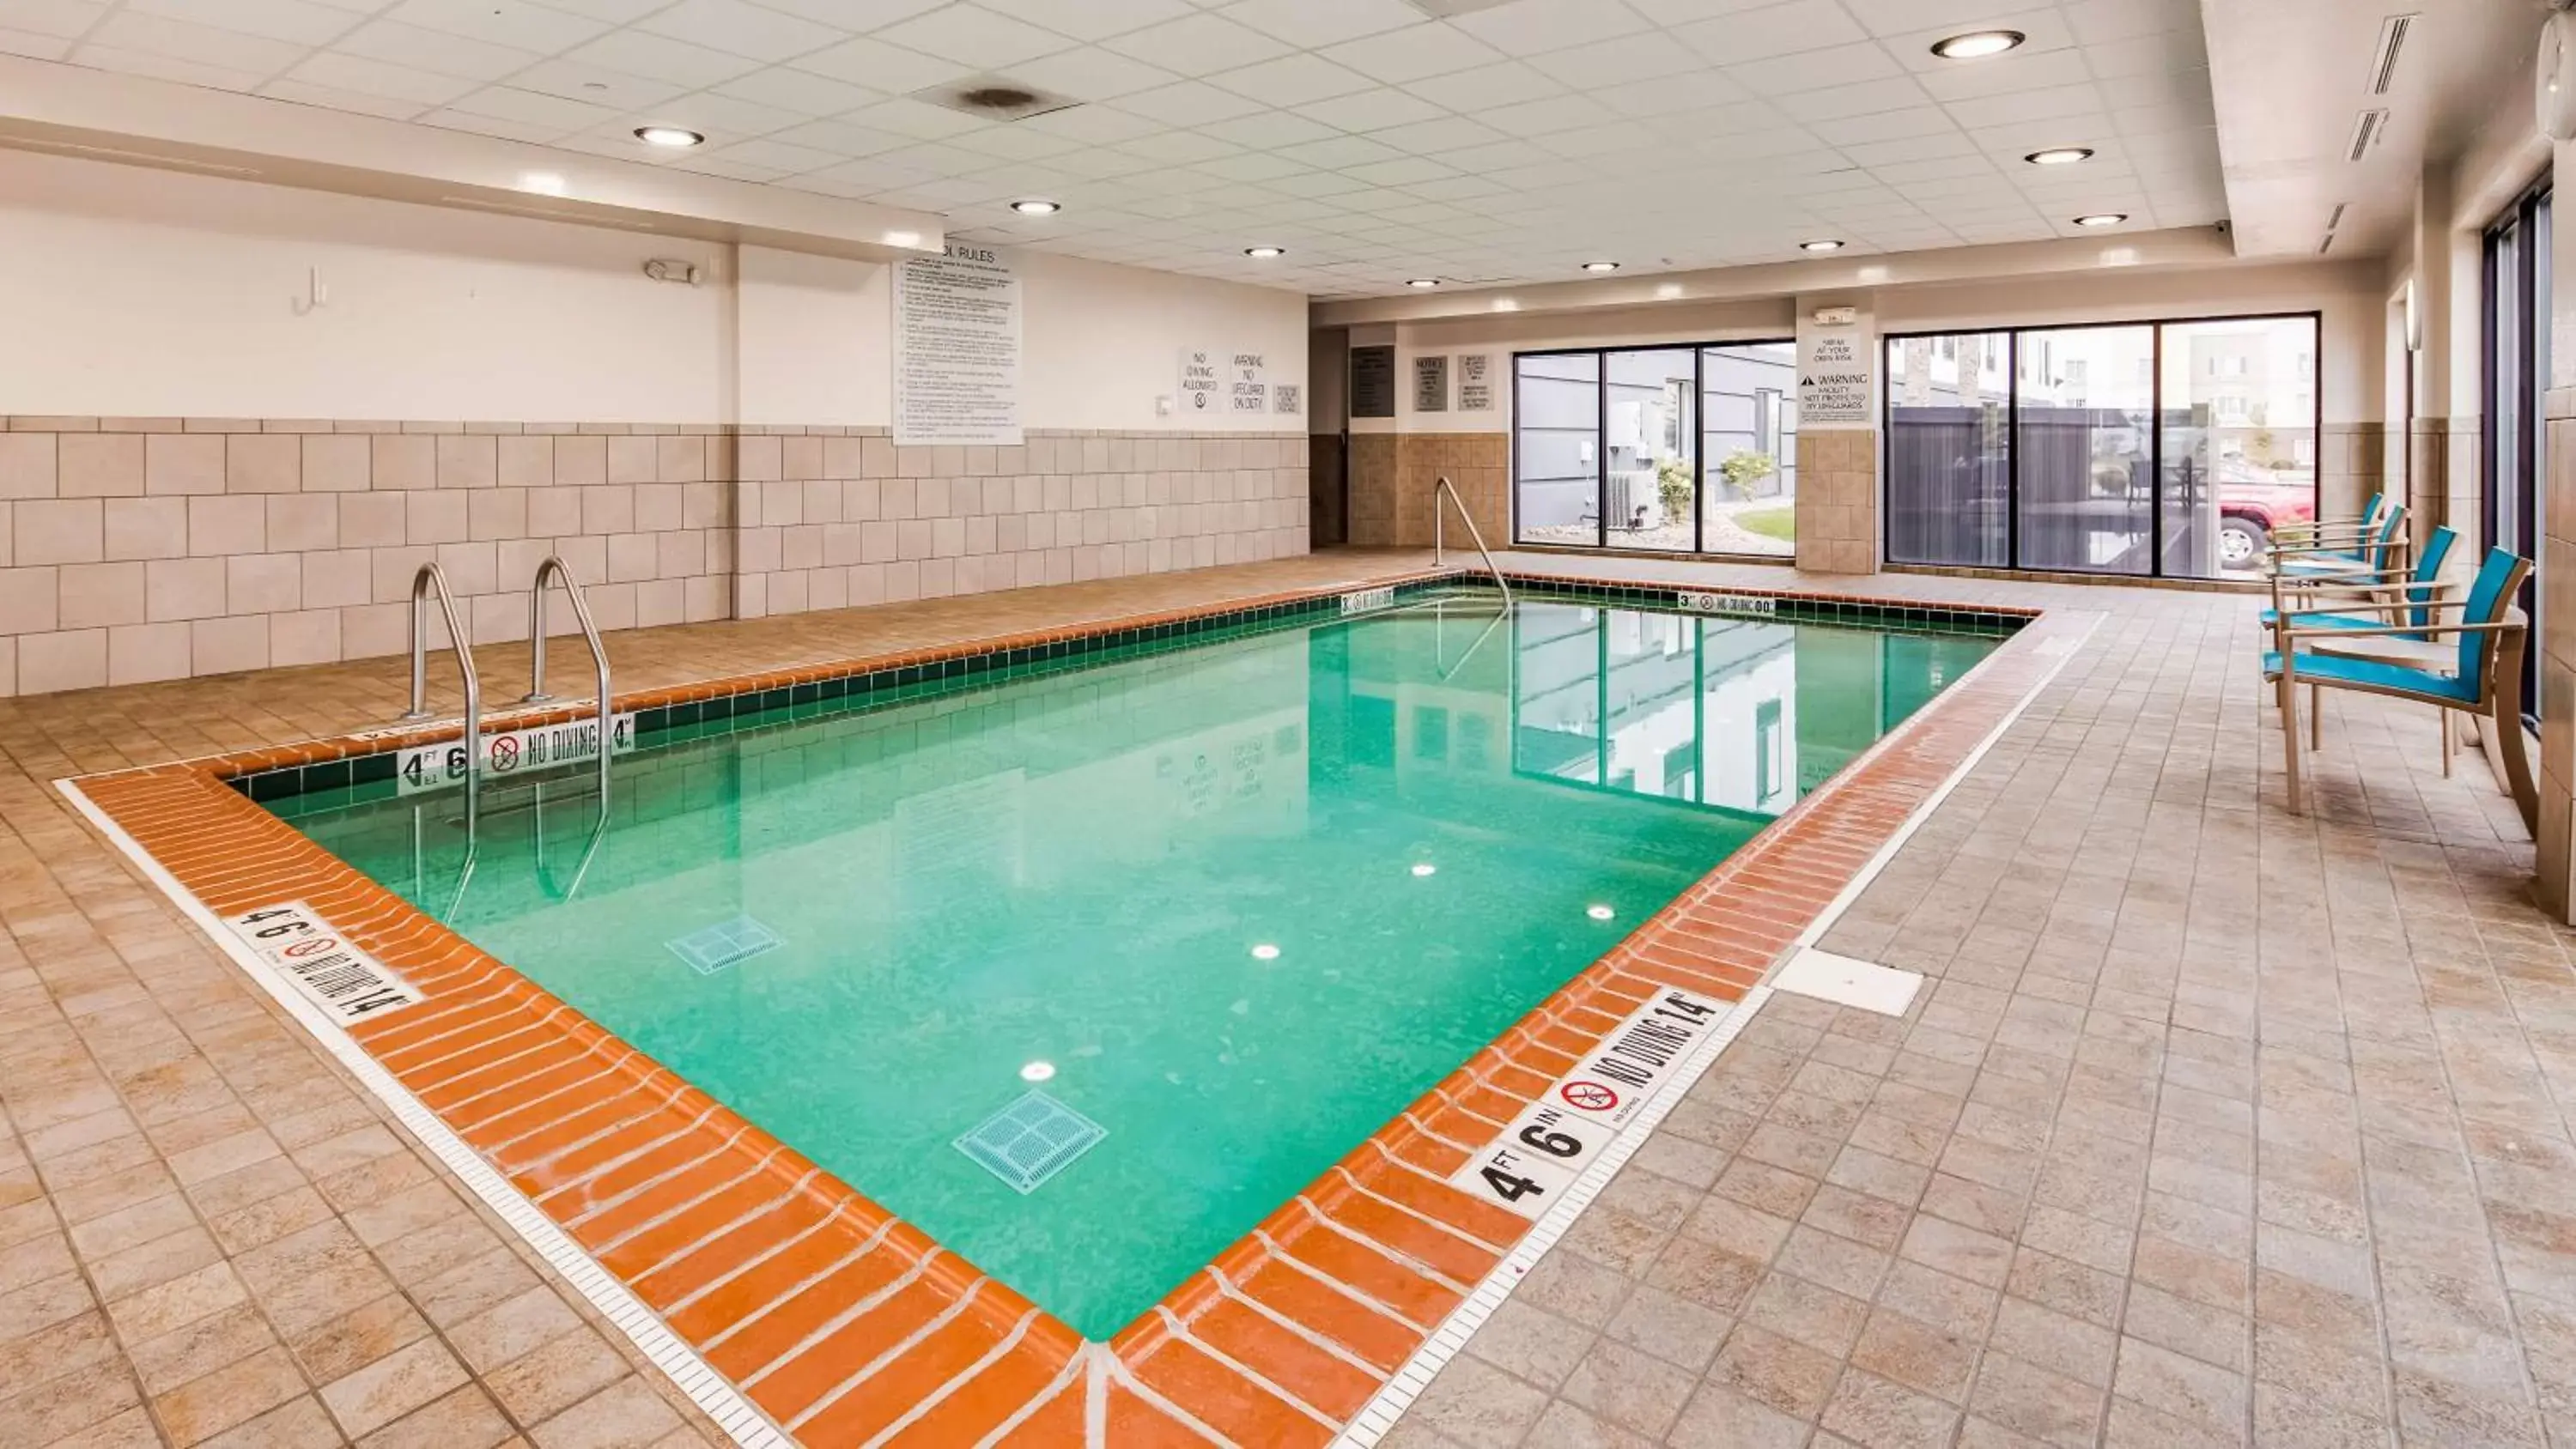 On site, Swimming Pool in Best Western Plus Champaign/Urbana Inn